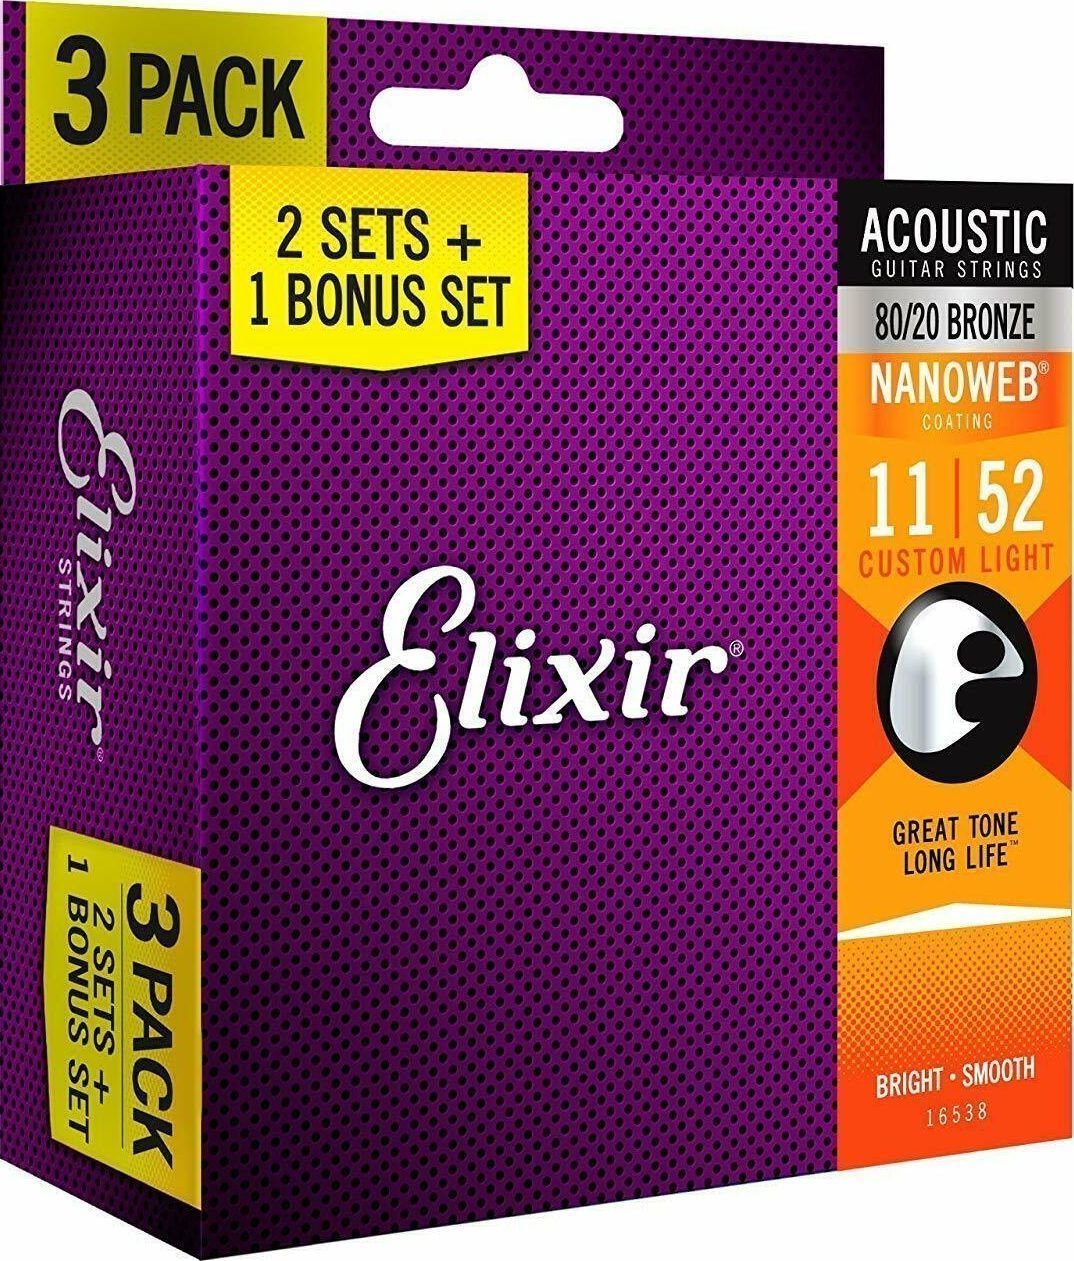 Struny pre akustickú gitaru Elixir 16538 NANOWEB Coating Custom Light 11-52 3-PACK